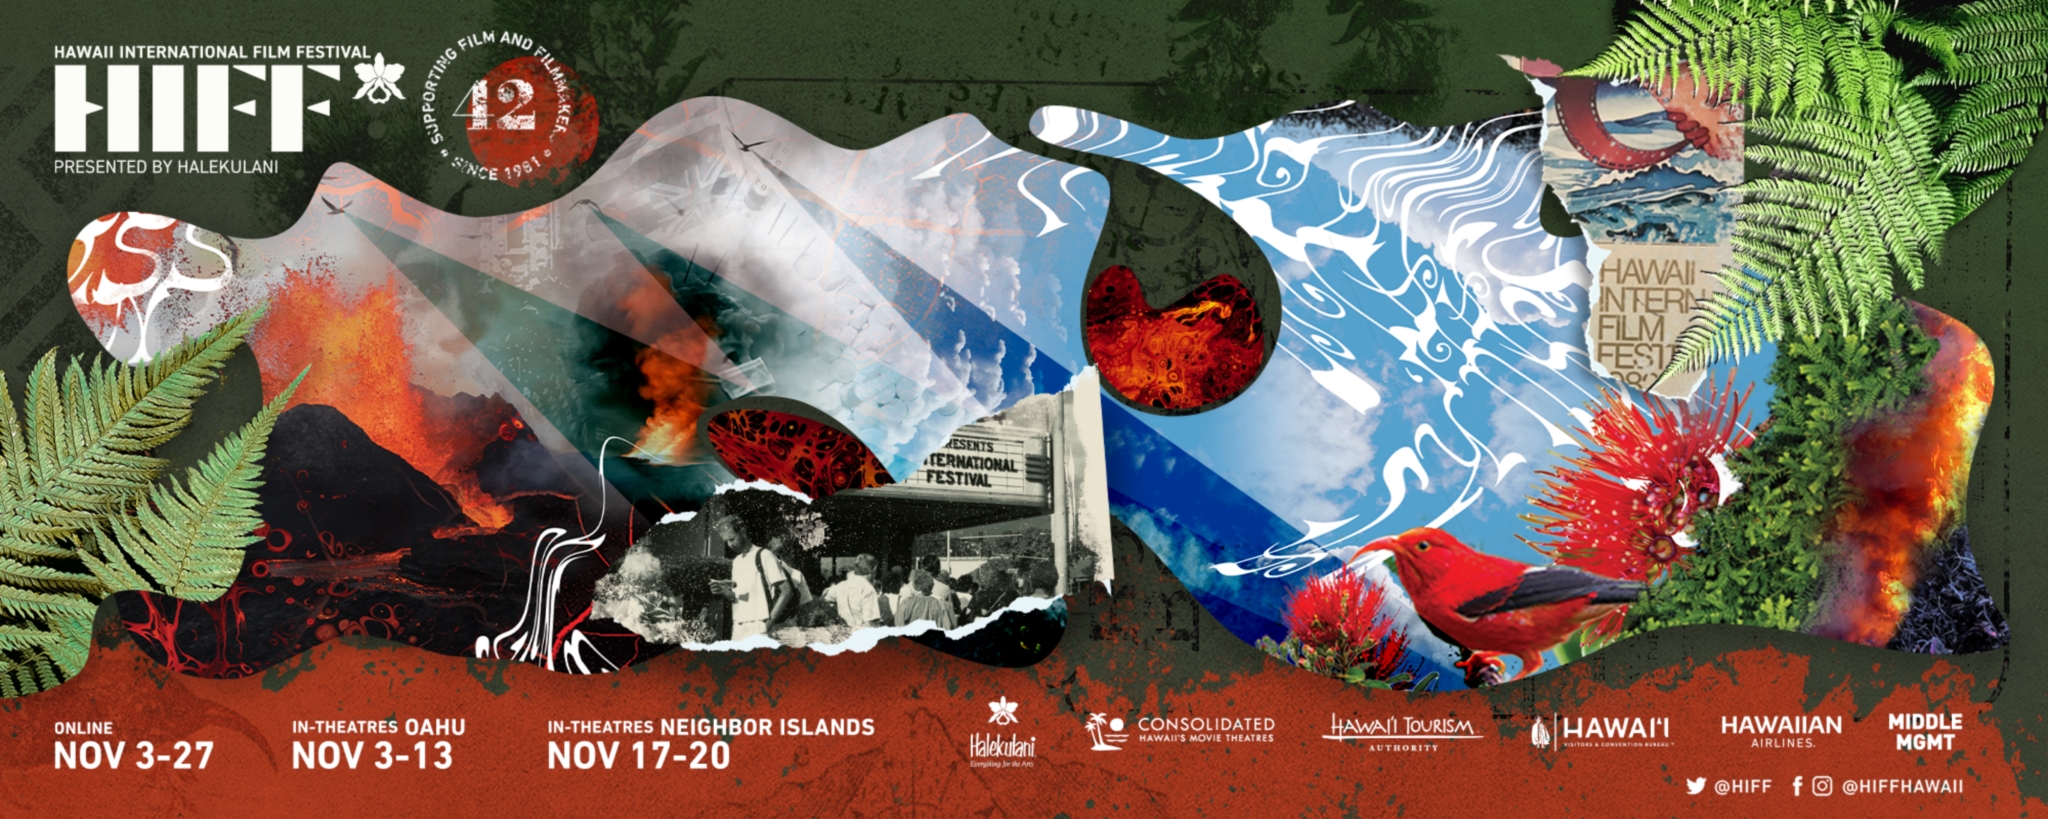 Hawaii International Film Festival: Kauai Showcase - Copy cover image